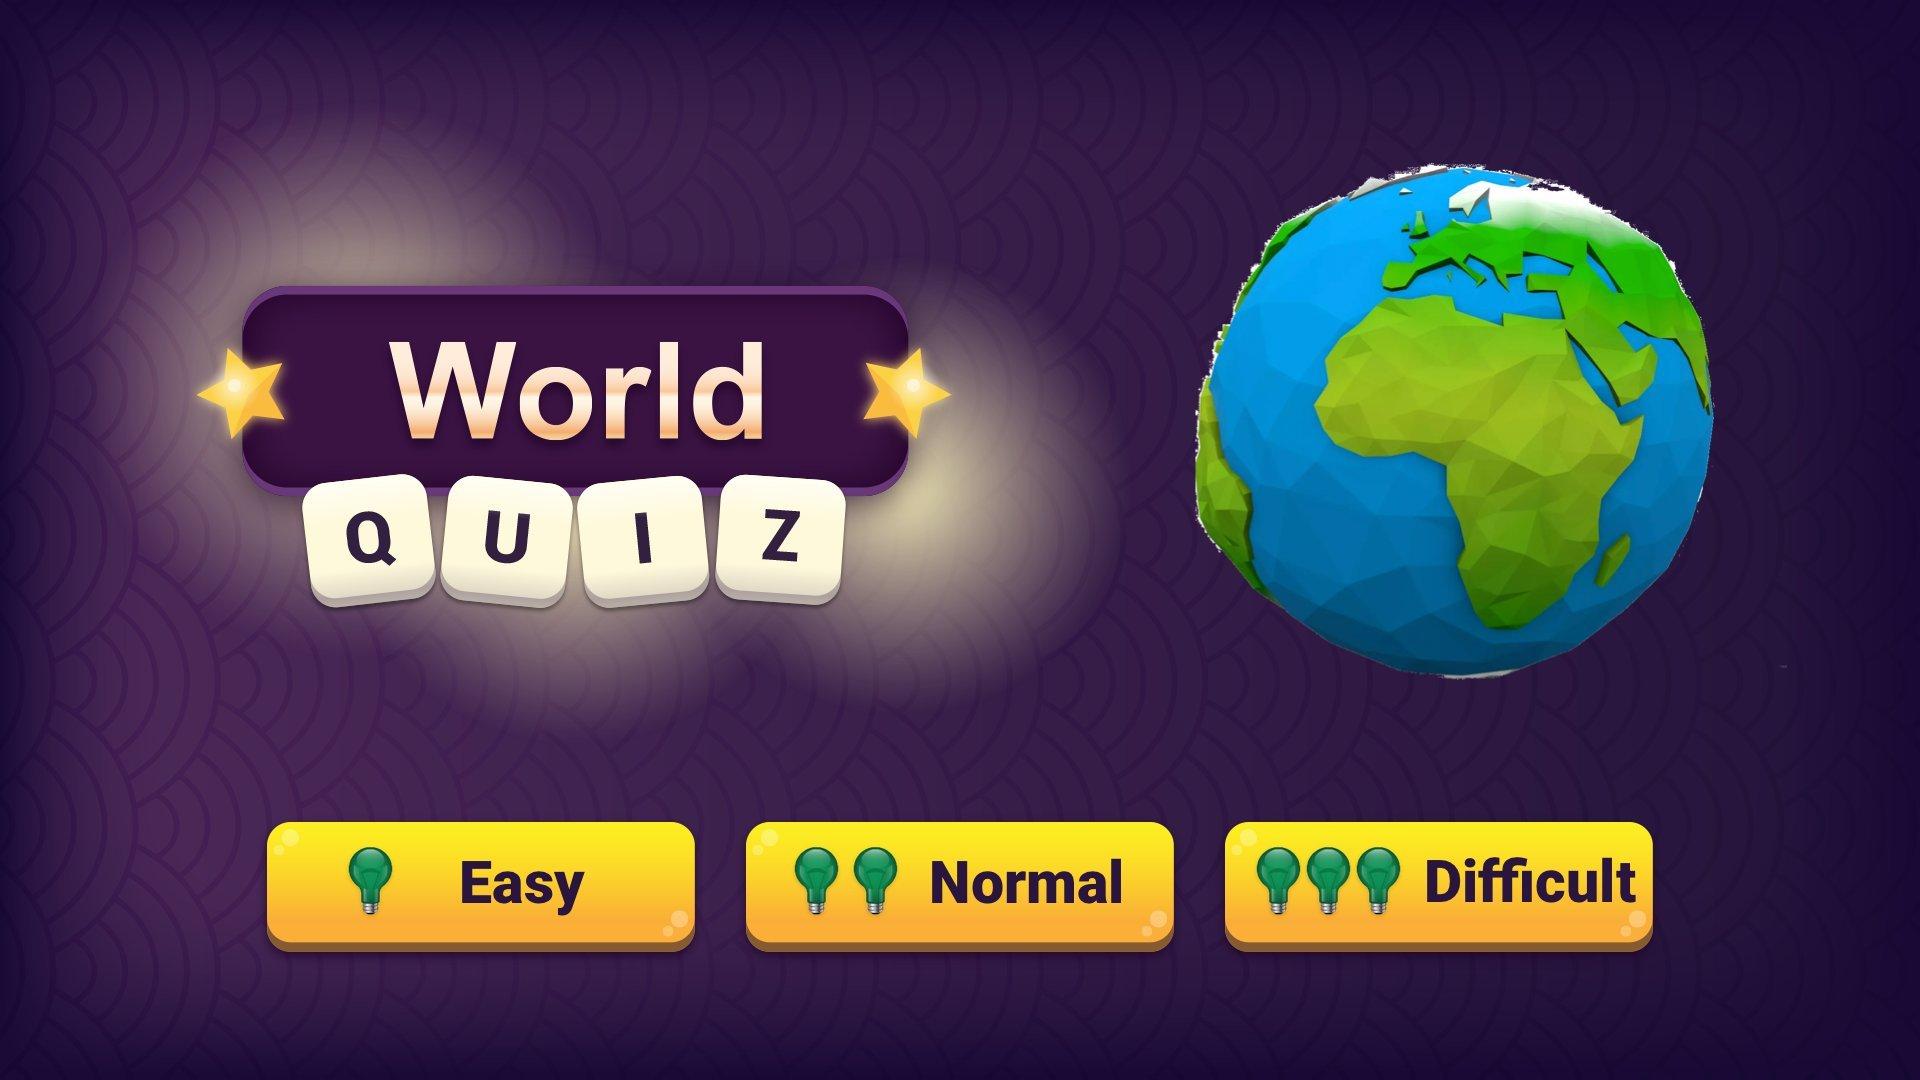 World Quiz - PlayStation 4